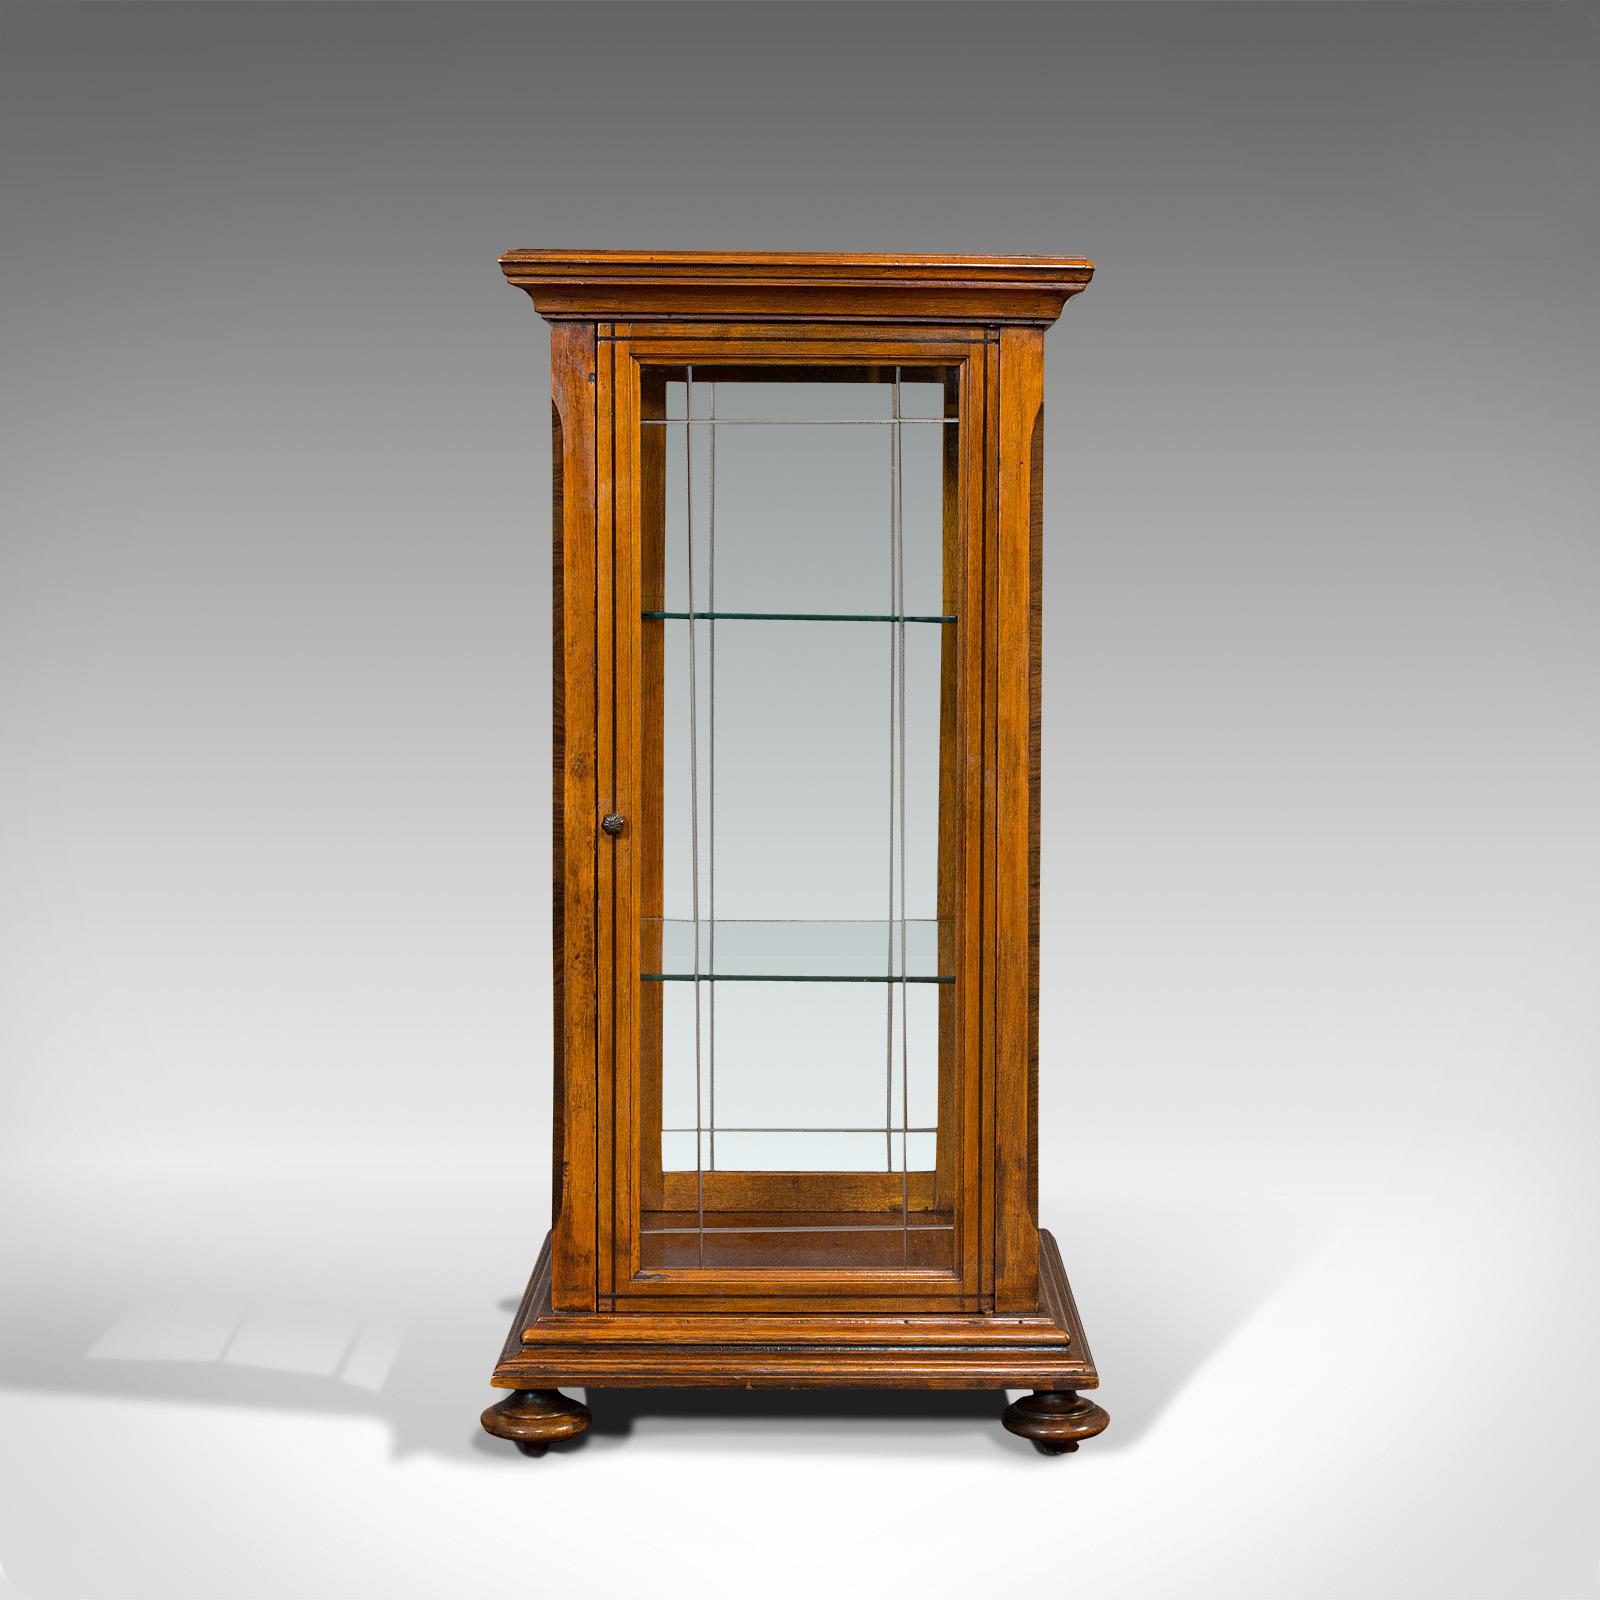 British Antique Shop Display Cabinet, English, Oak, Walnut, Showcase, Edwardian